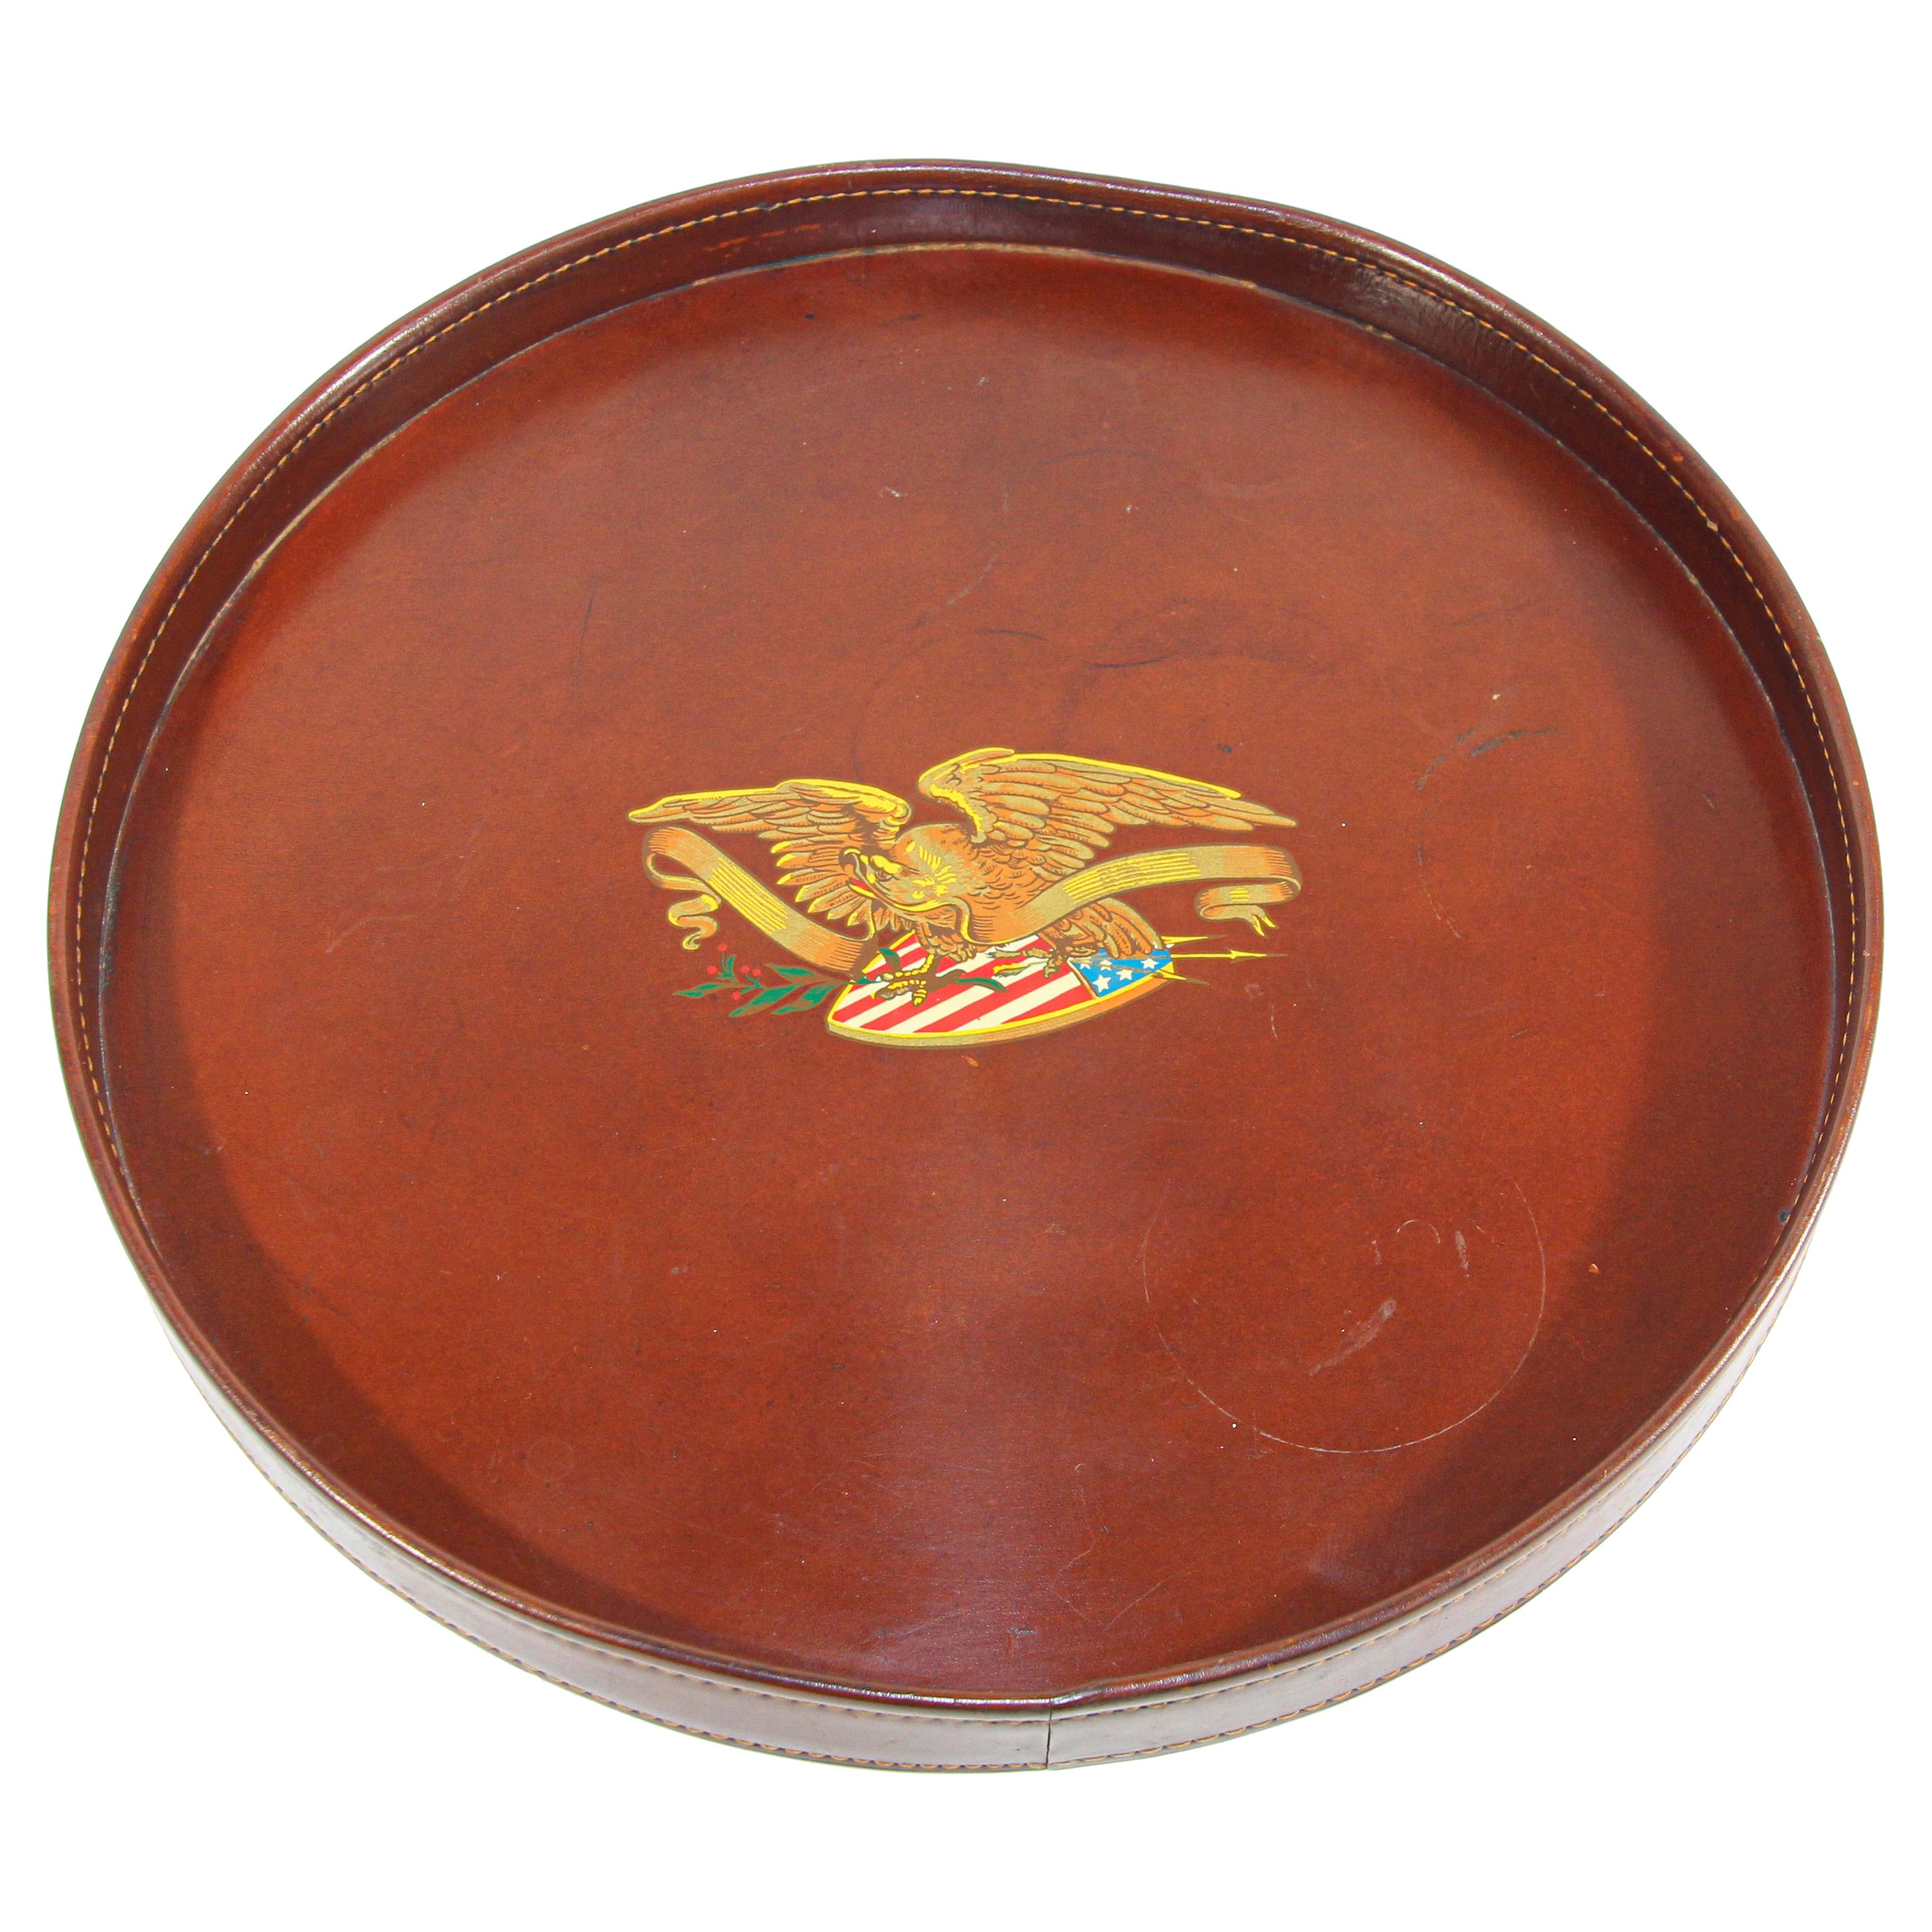 Vintage Runde Brown Leather Tablett mit The American Bold Eagle und US Flagge im Angebot